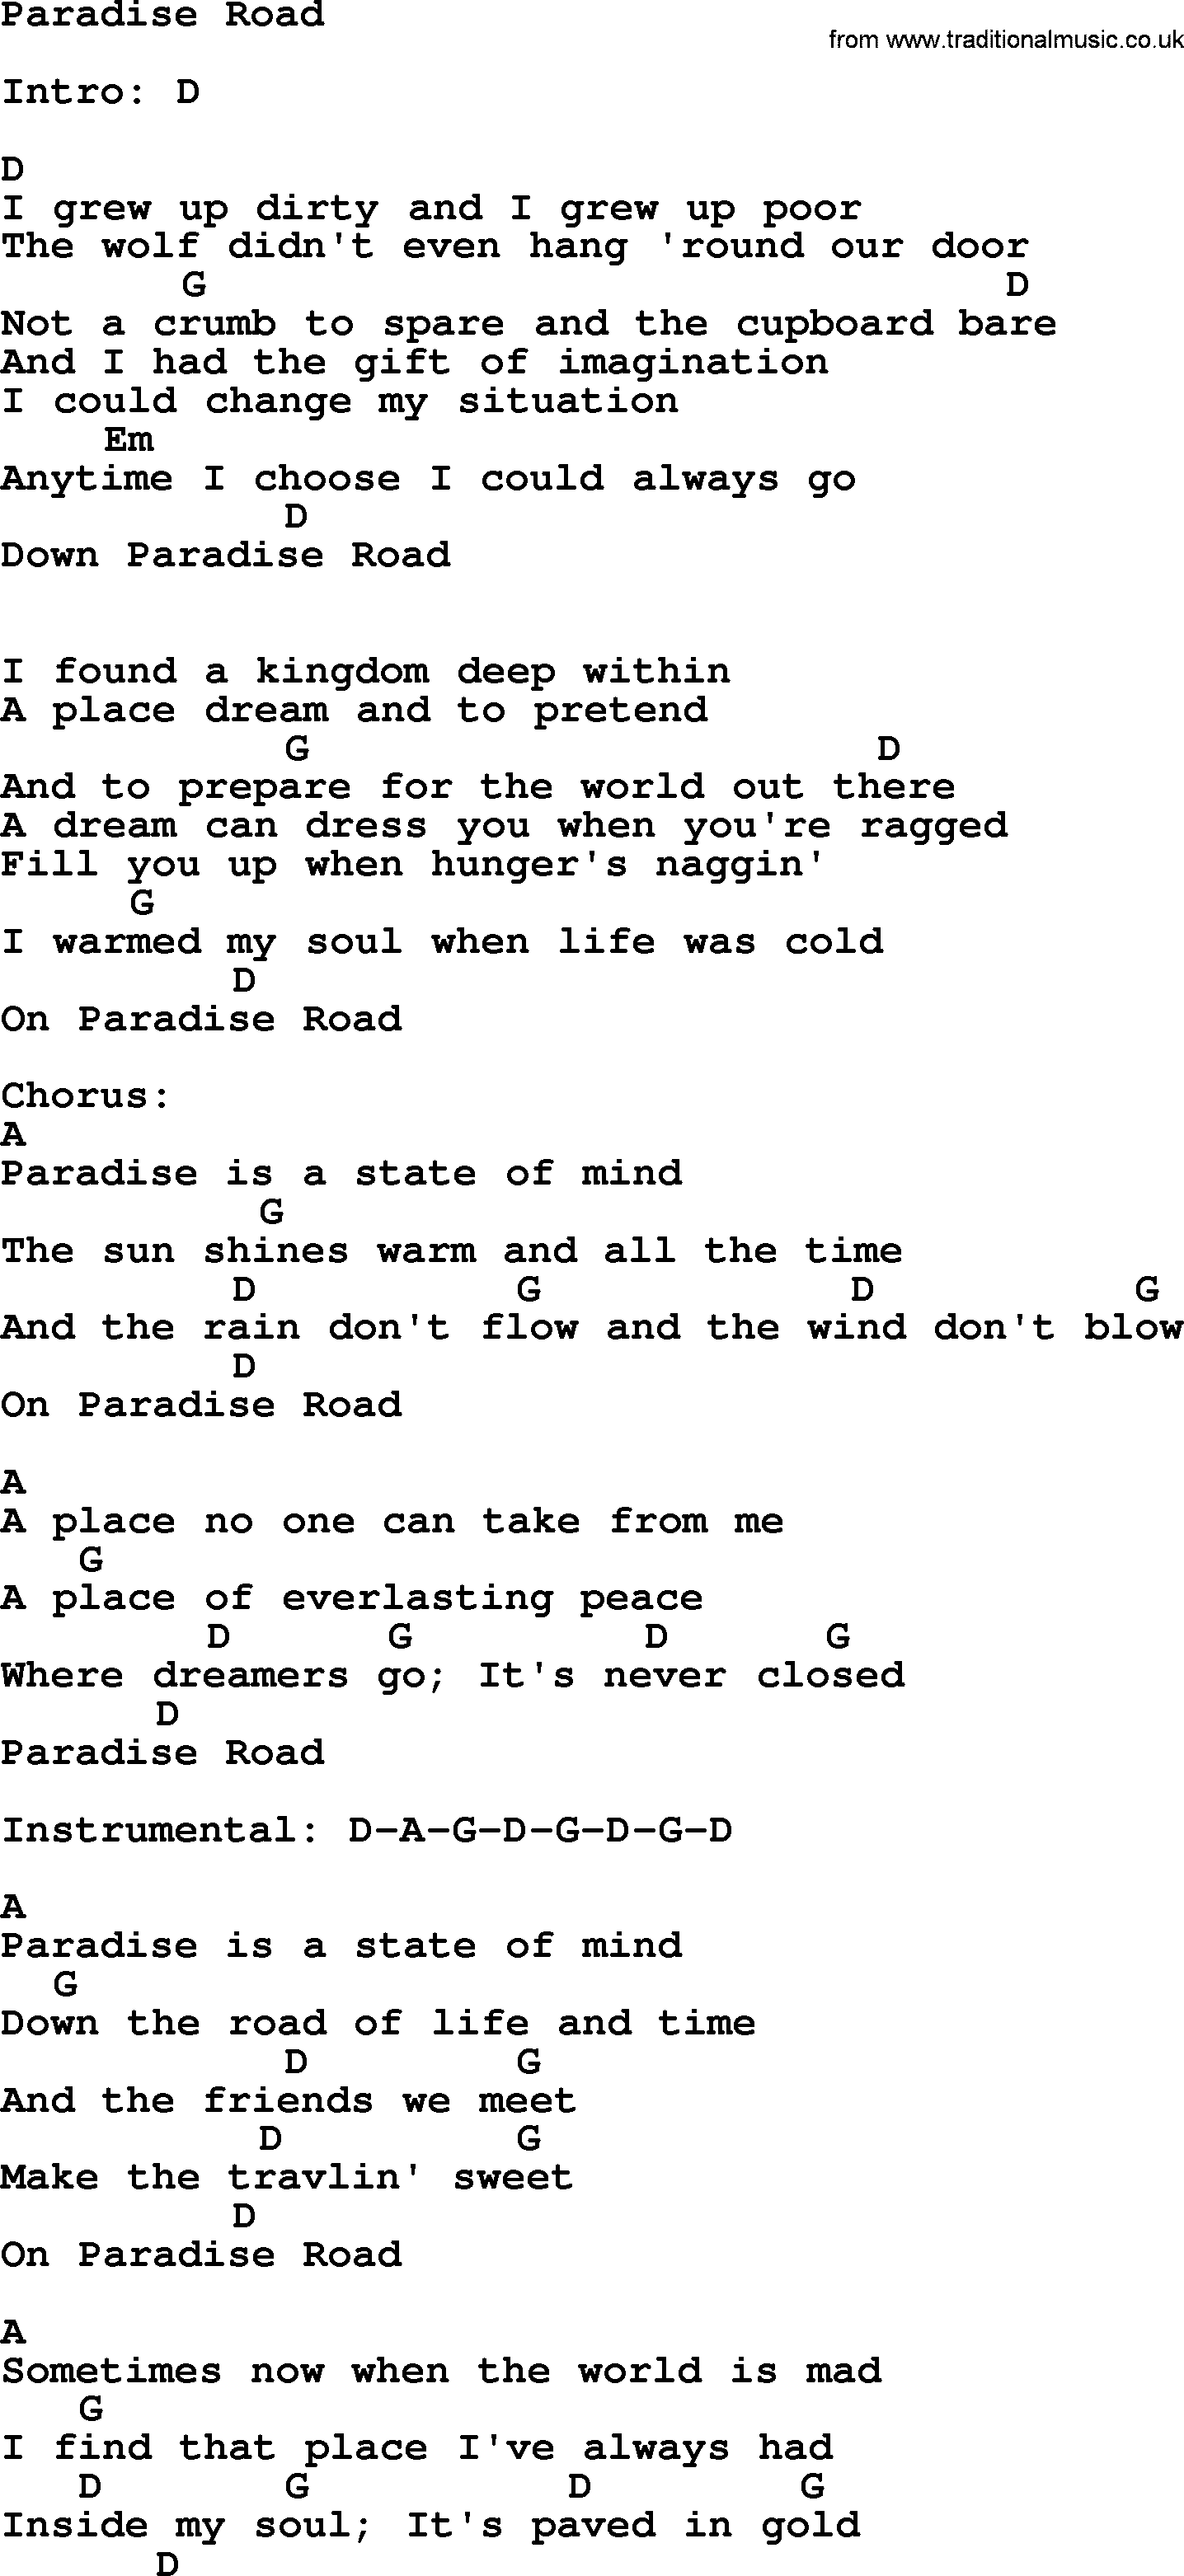 Dolly Parton song Paradise Road, lyrics and chords